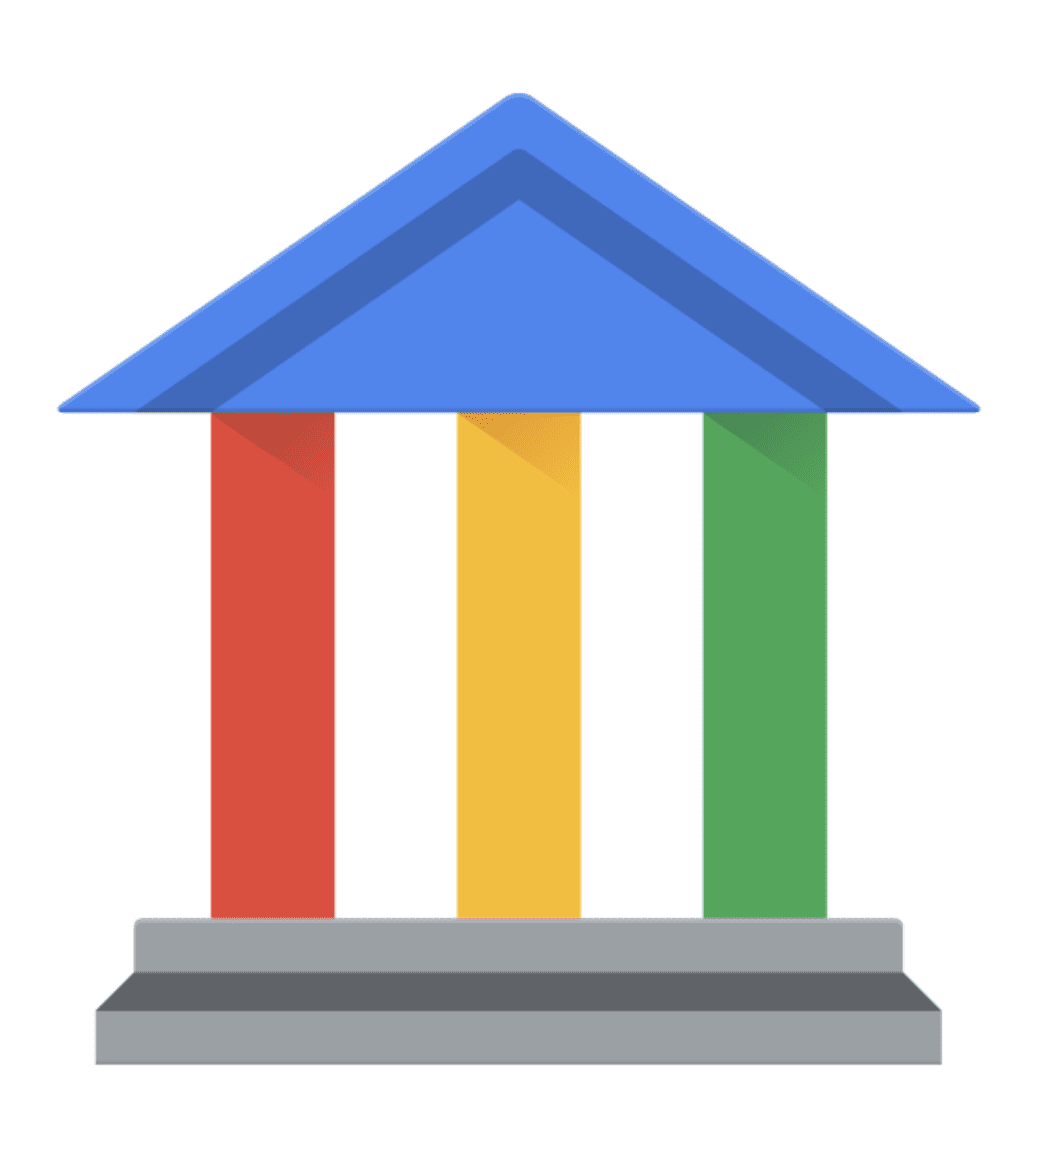 The logo for Google Academy London